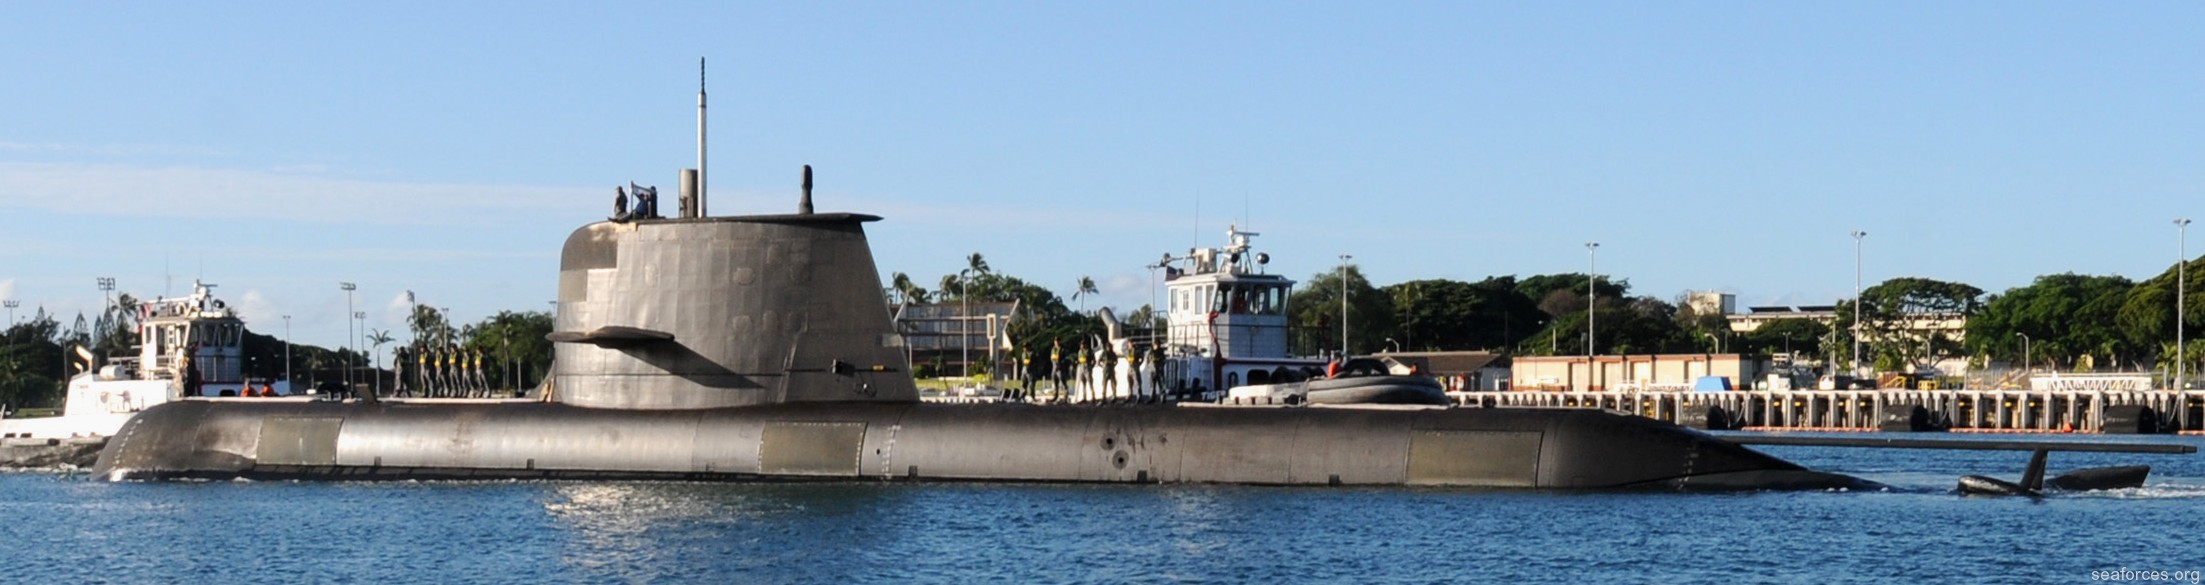 hmas sheean ssg-77 collins class attack submarine ssk royal australian navy 14